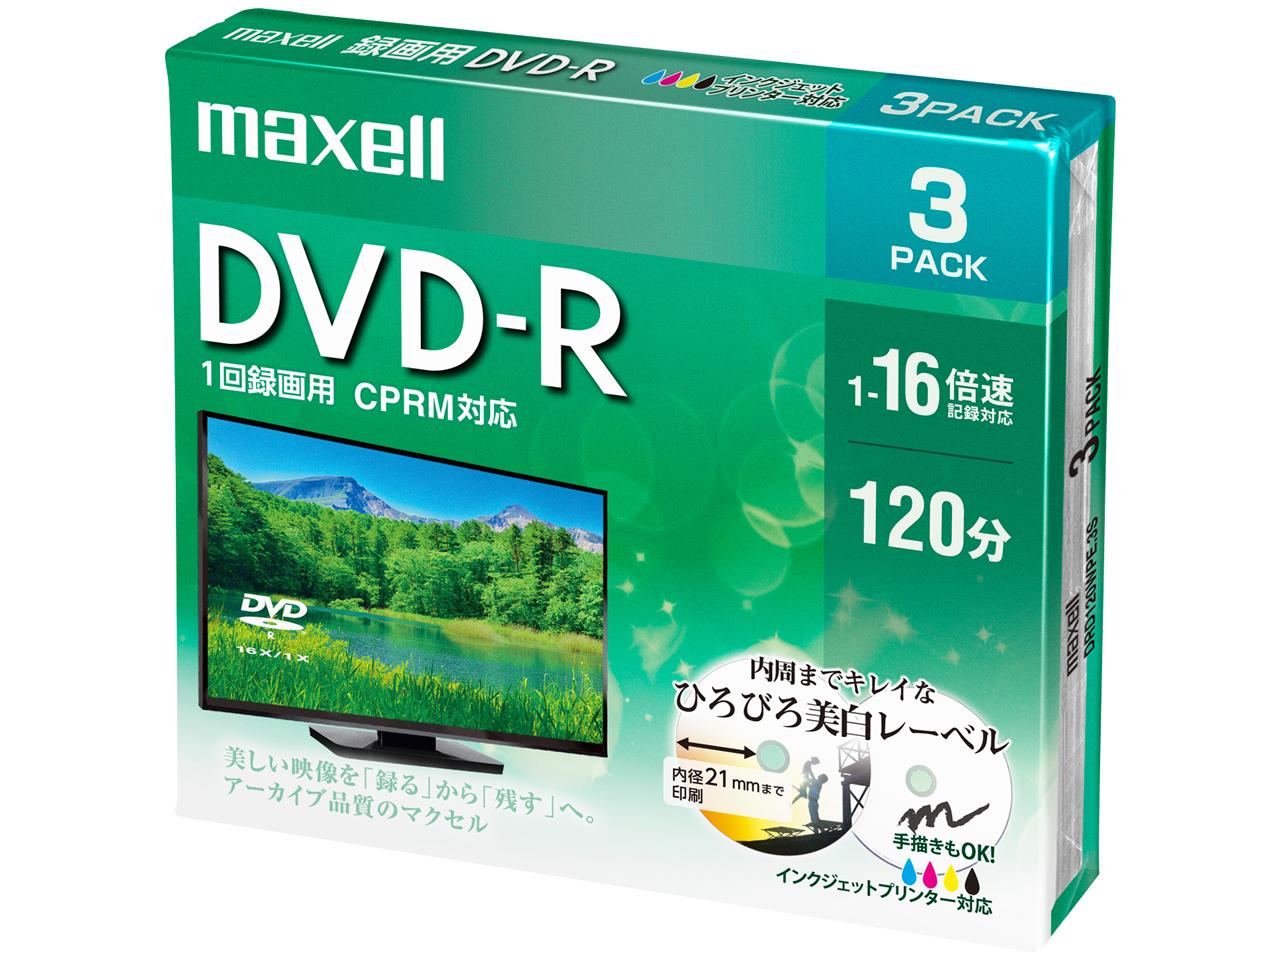 ^p DVD-R W120 16{ CPRM v^uzCg 3pbNyDRD120WPE.3Sz maxell